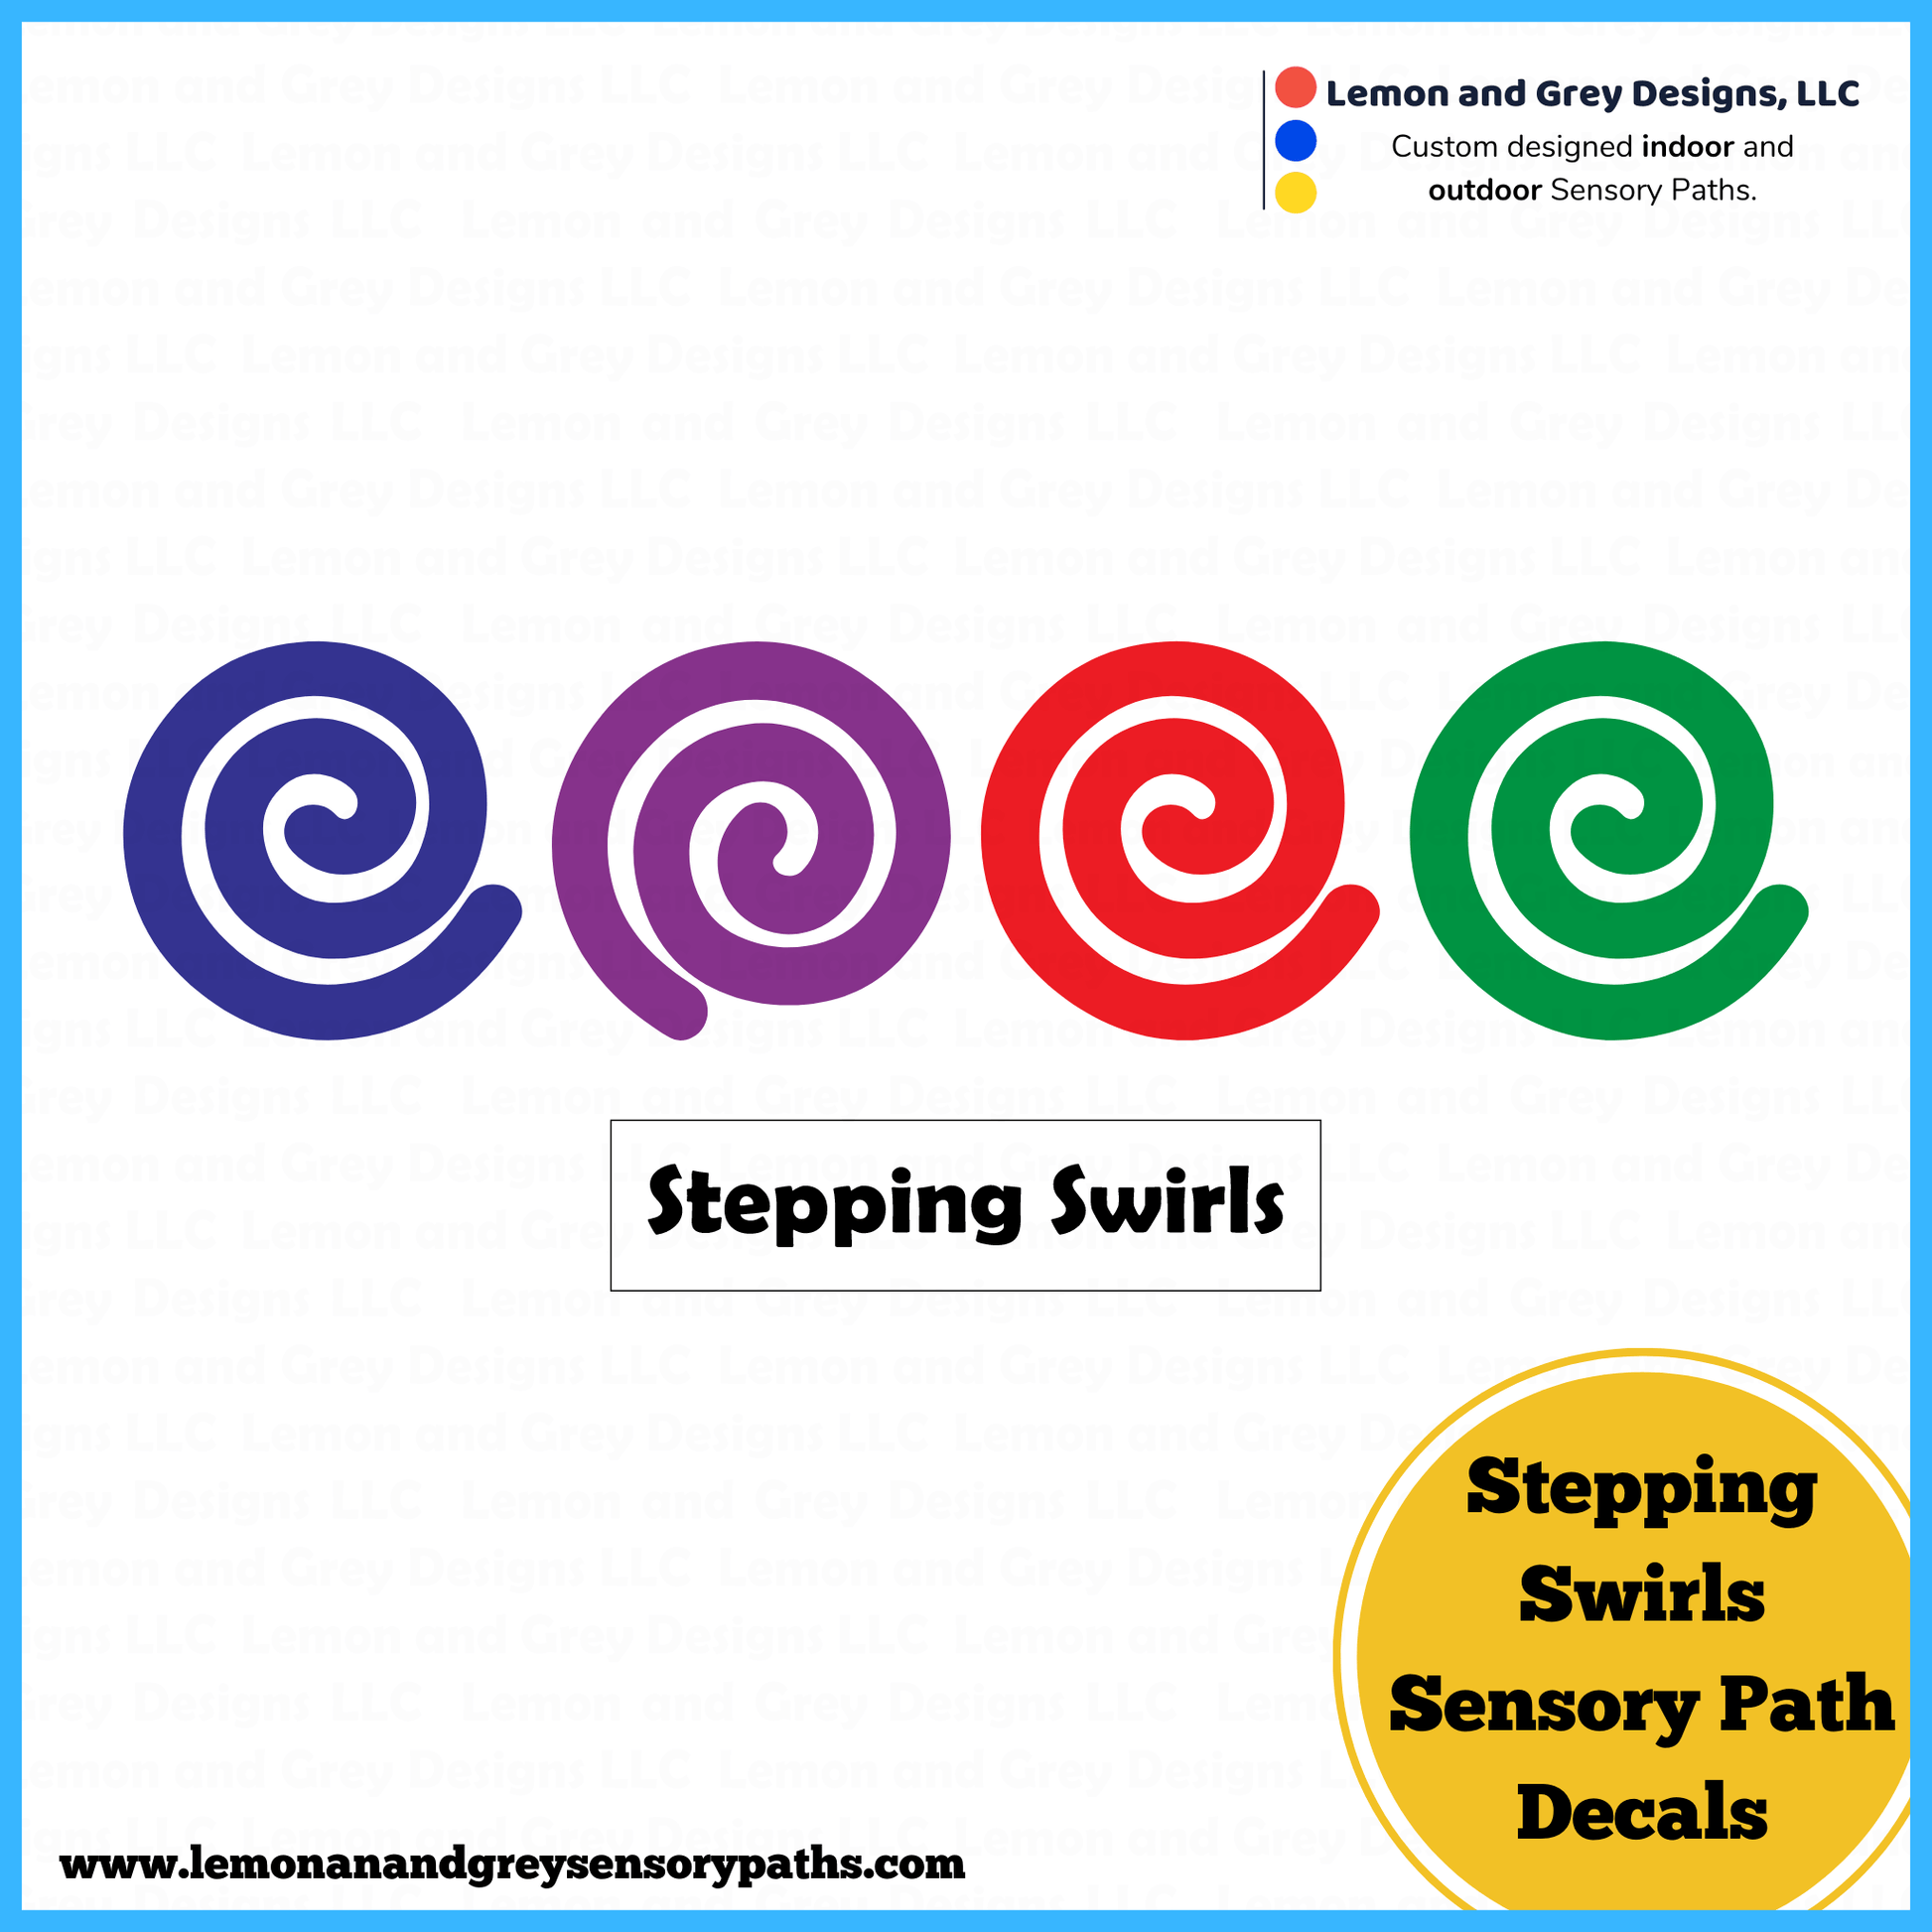 Stepping Swirls Sensory Path Decals